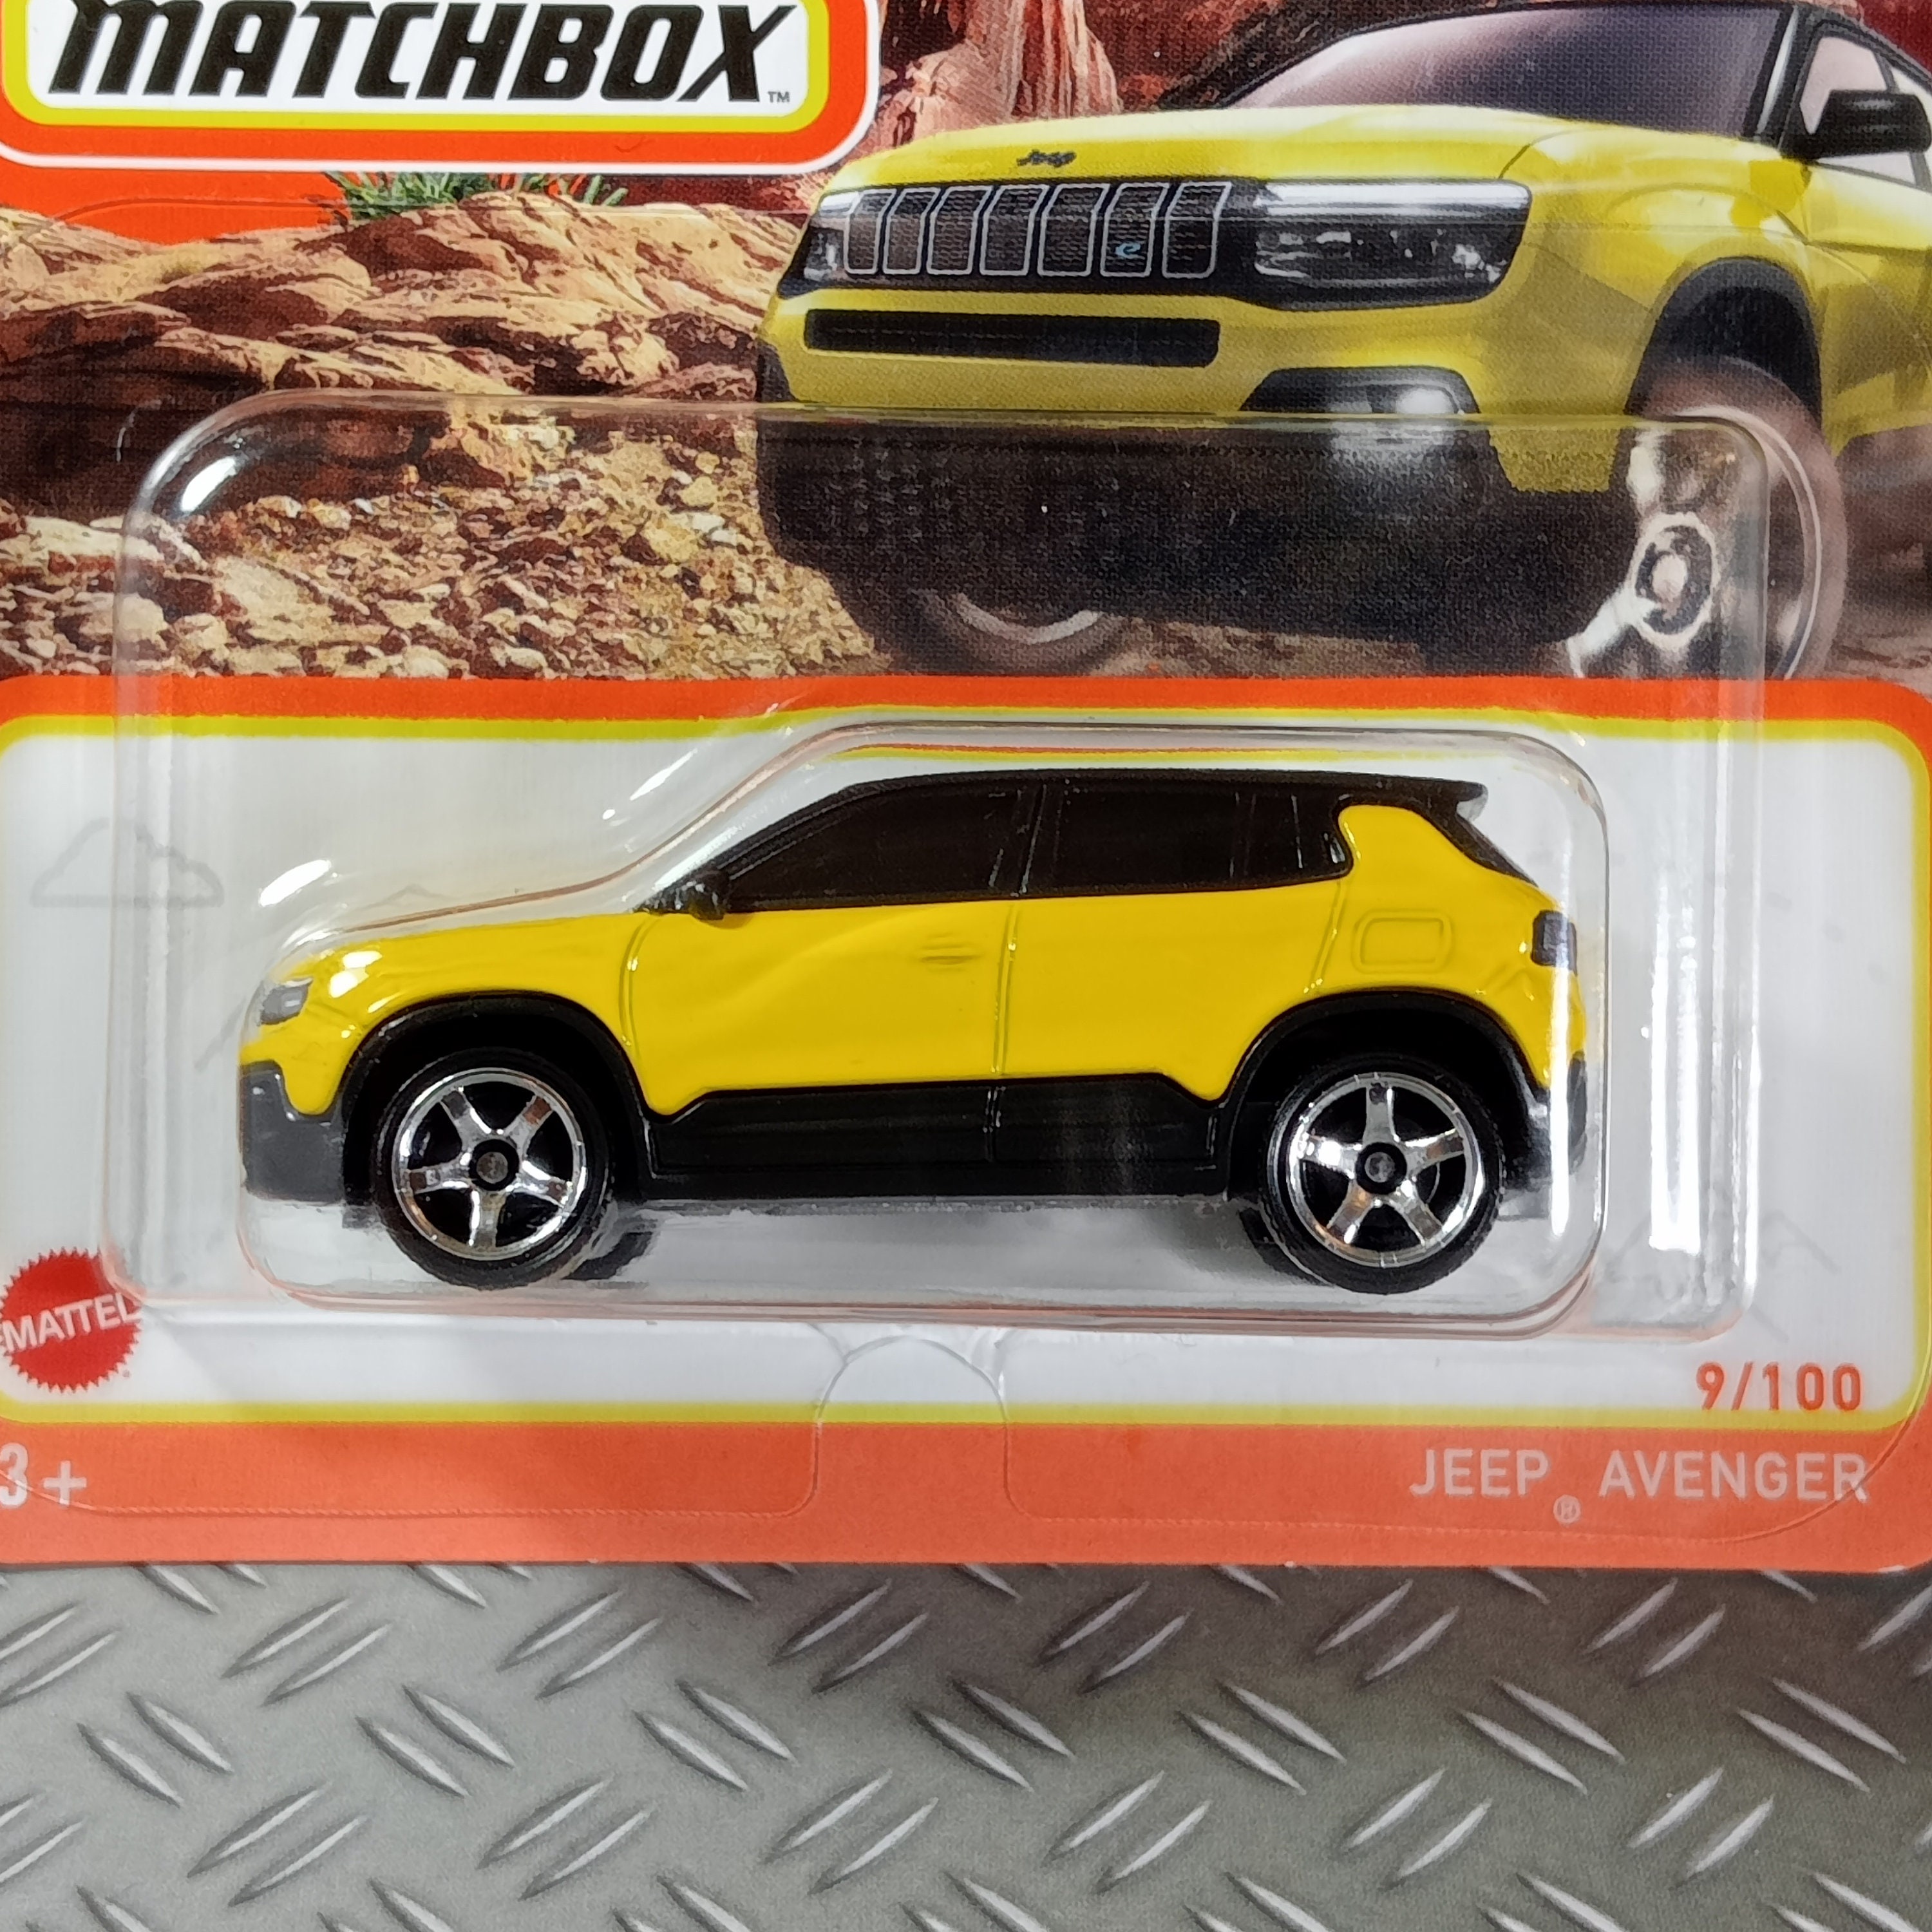  Matchbox Jeep Avenger, Yellow 9/100 : Toys & Games